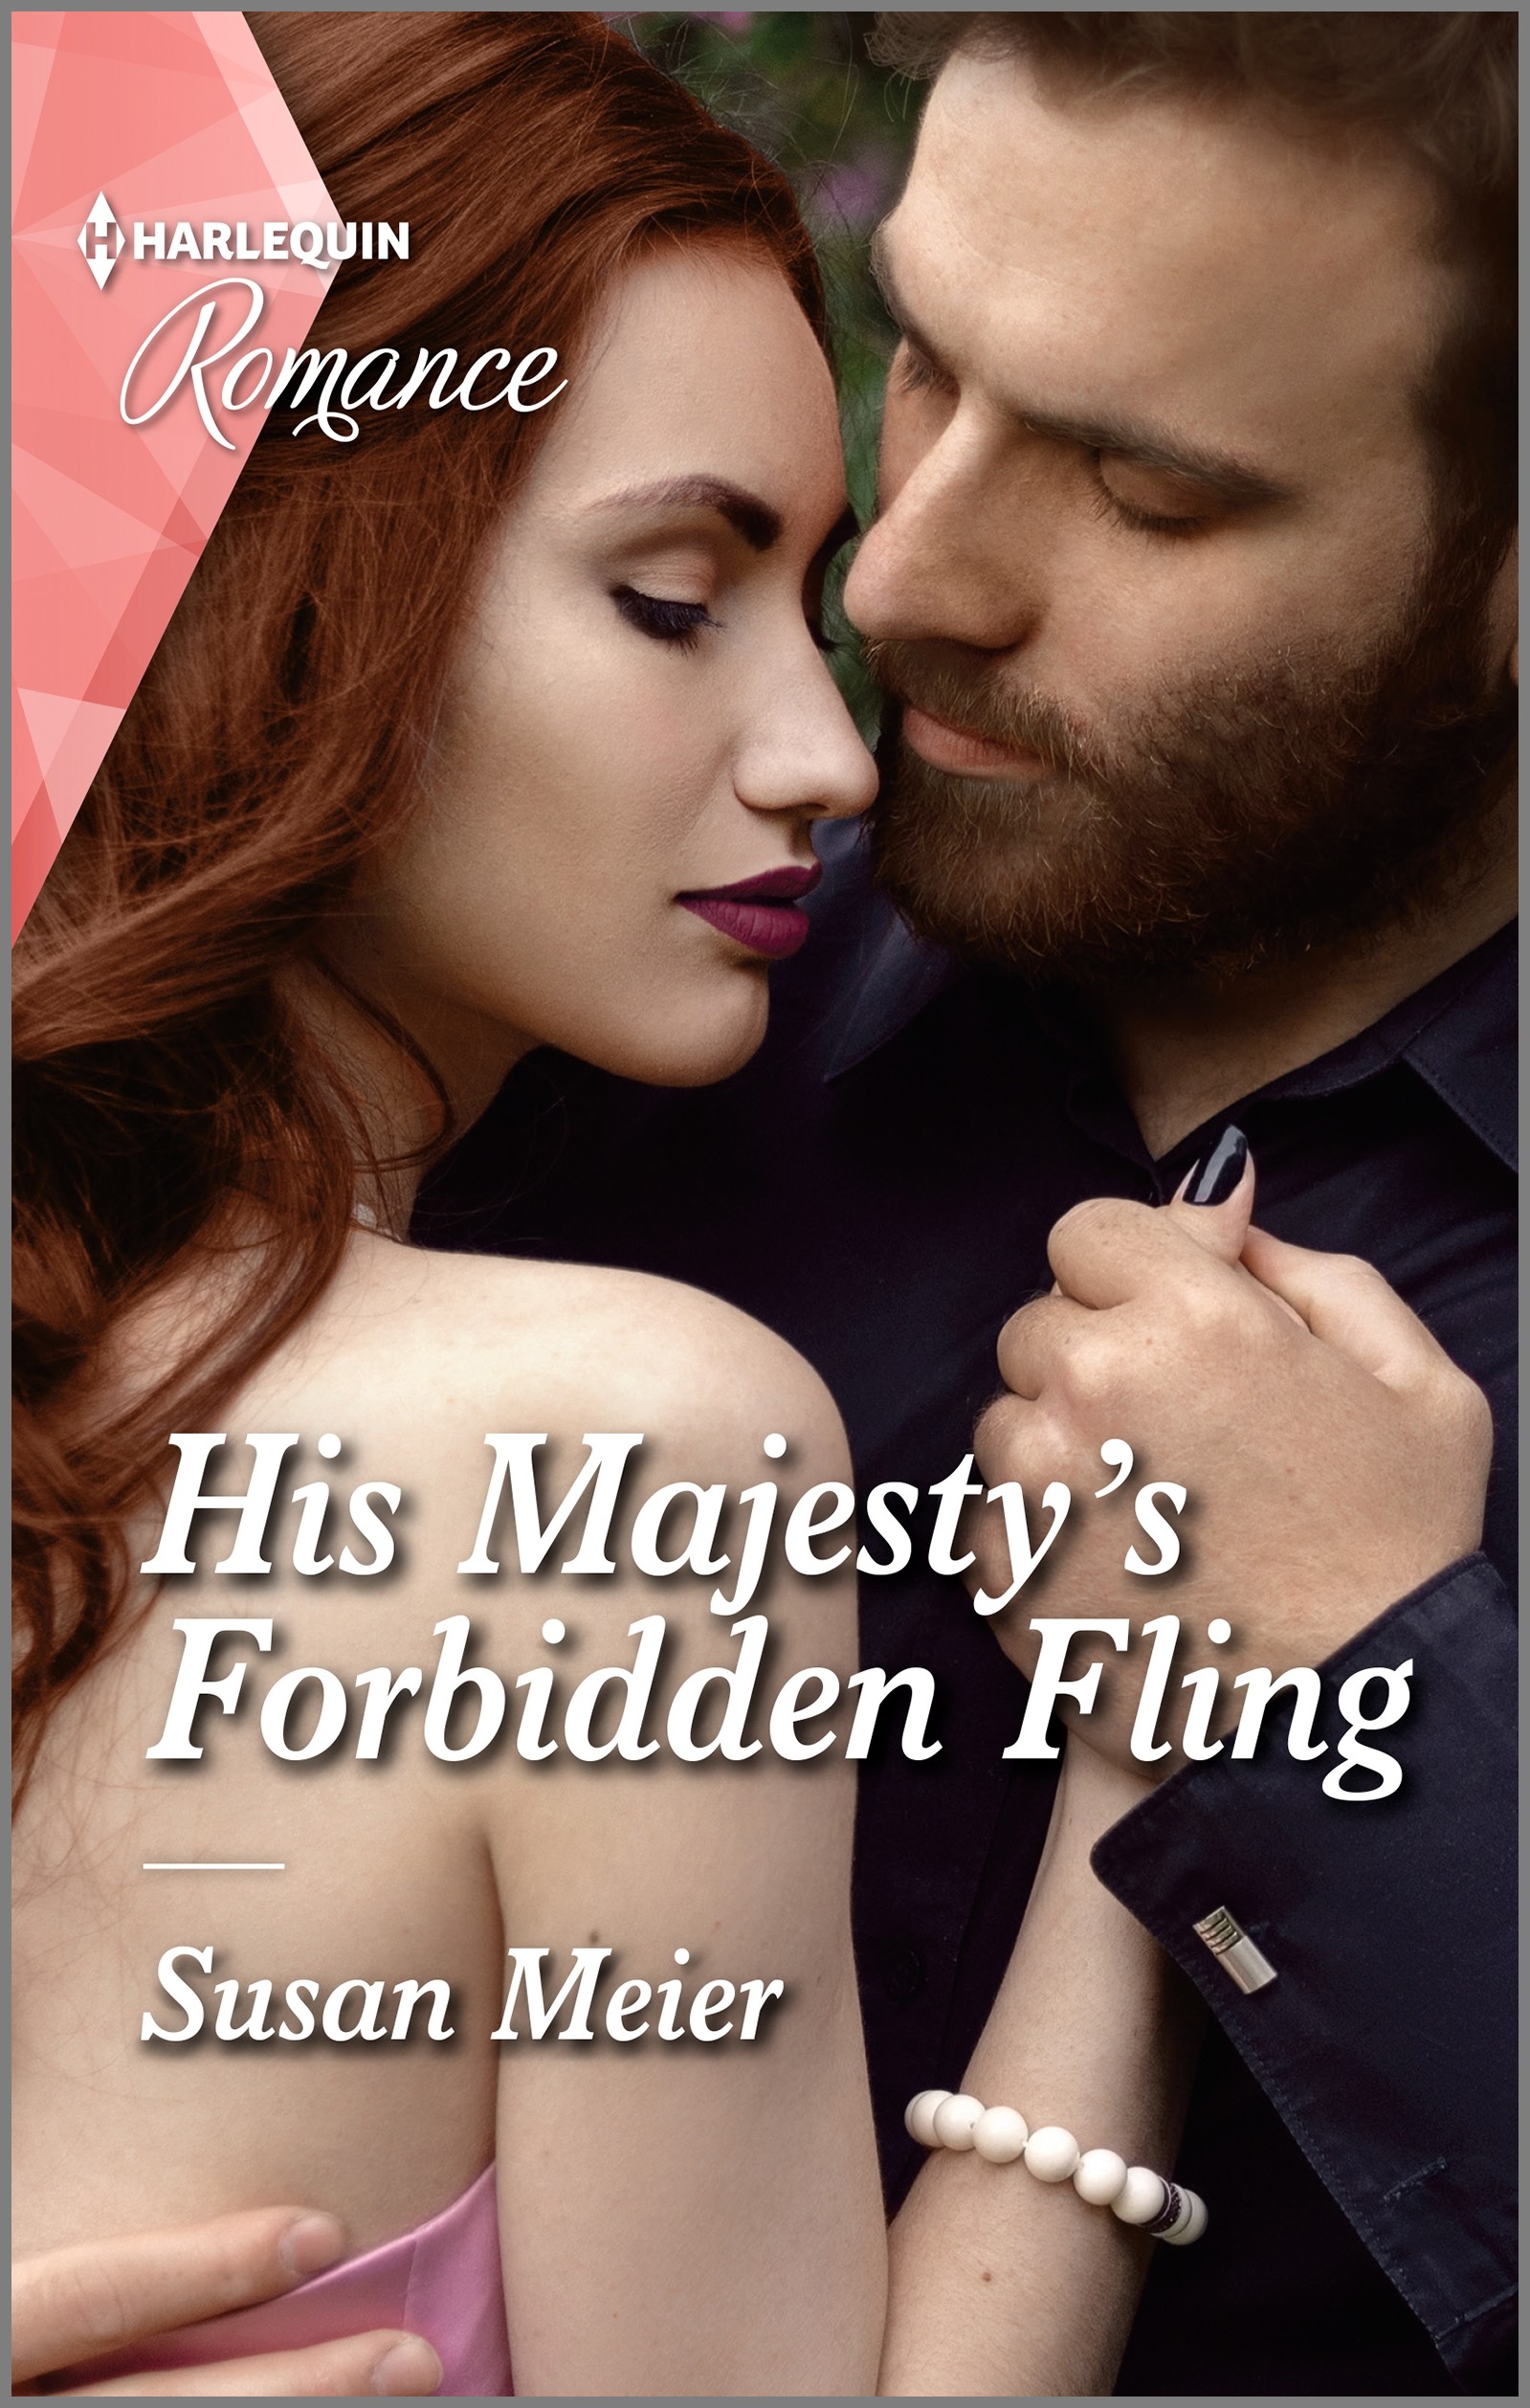 His Majesty's Forbidden Fling by Susan Meier